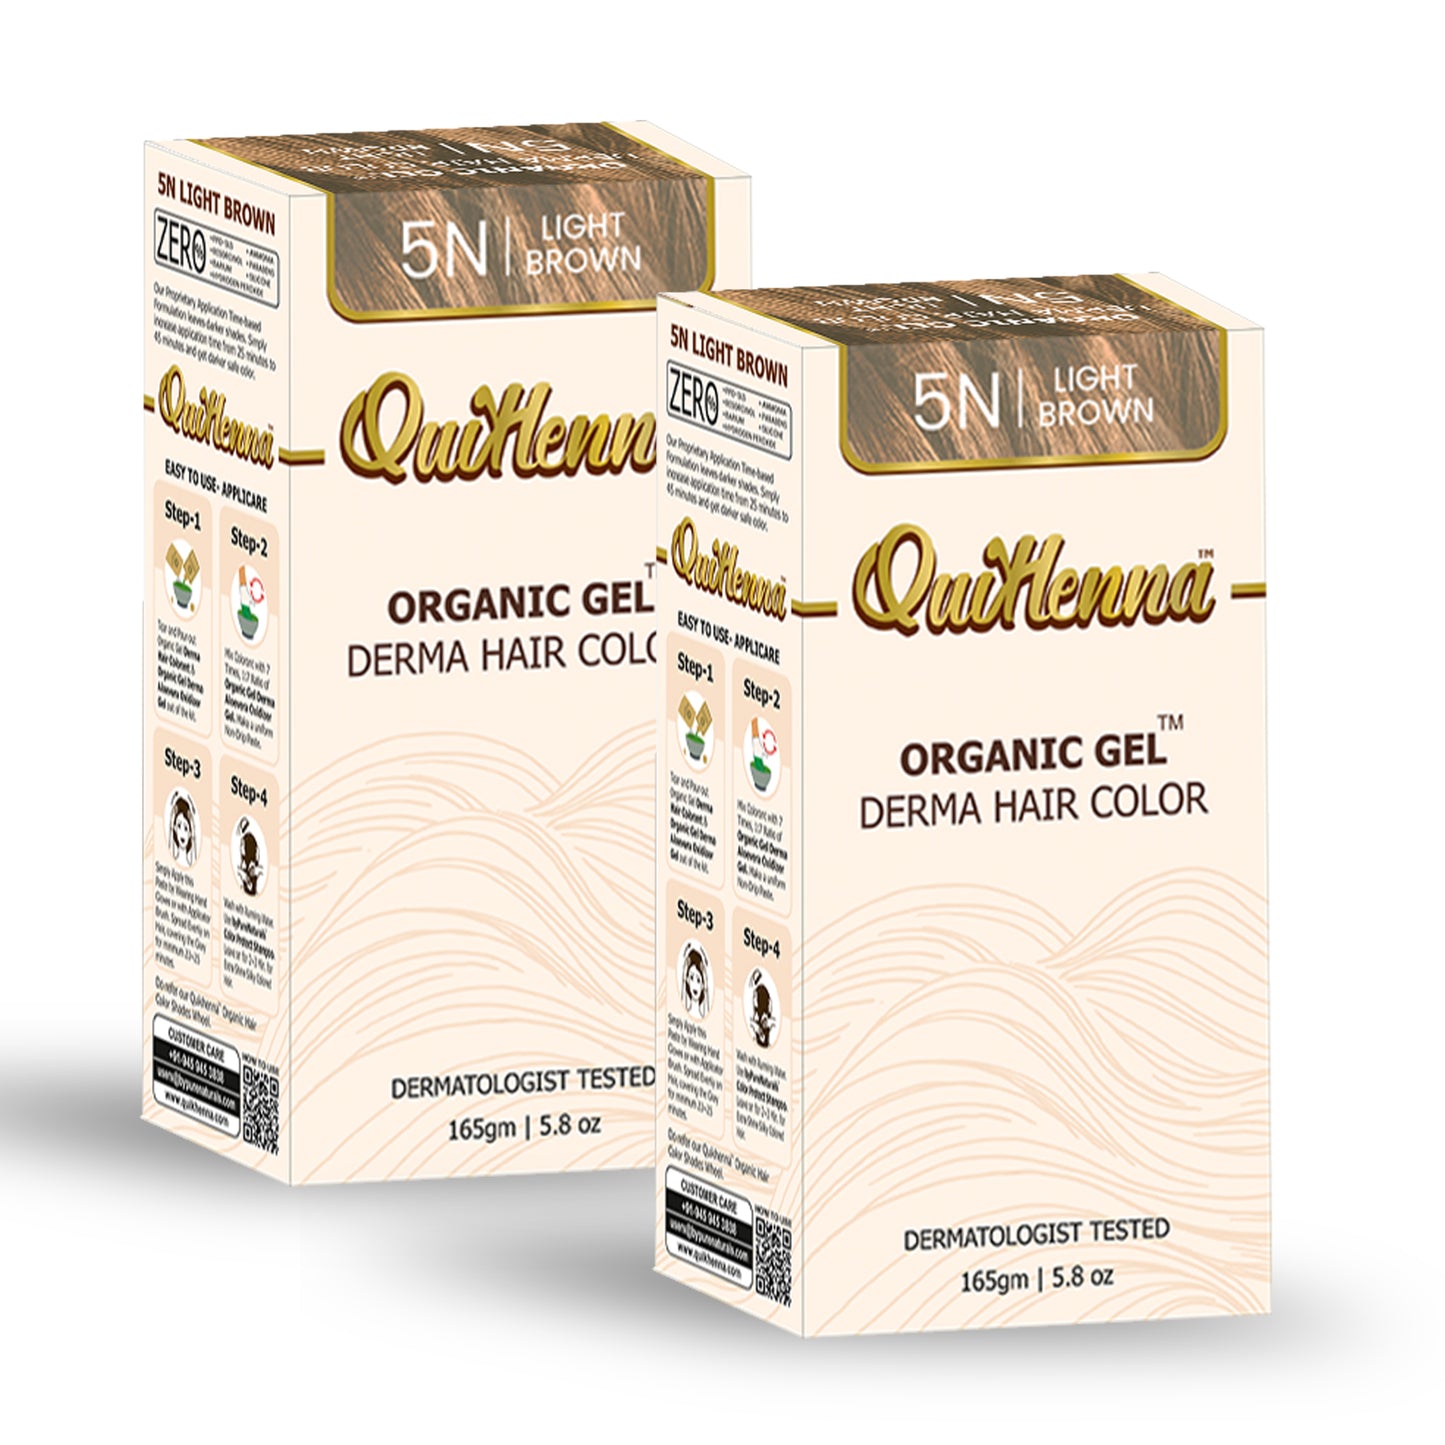 Quikhenna Derma Organic Gel Hair Colour byPureNaturals-22